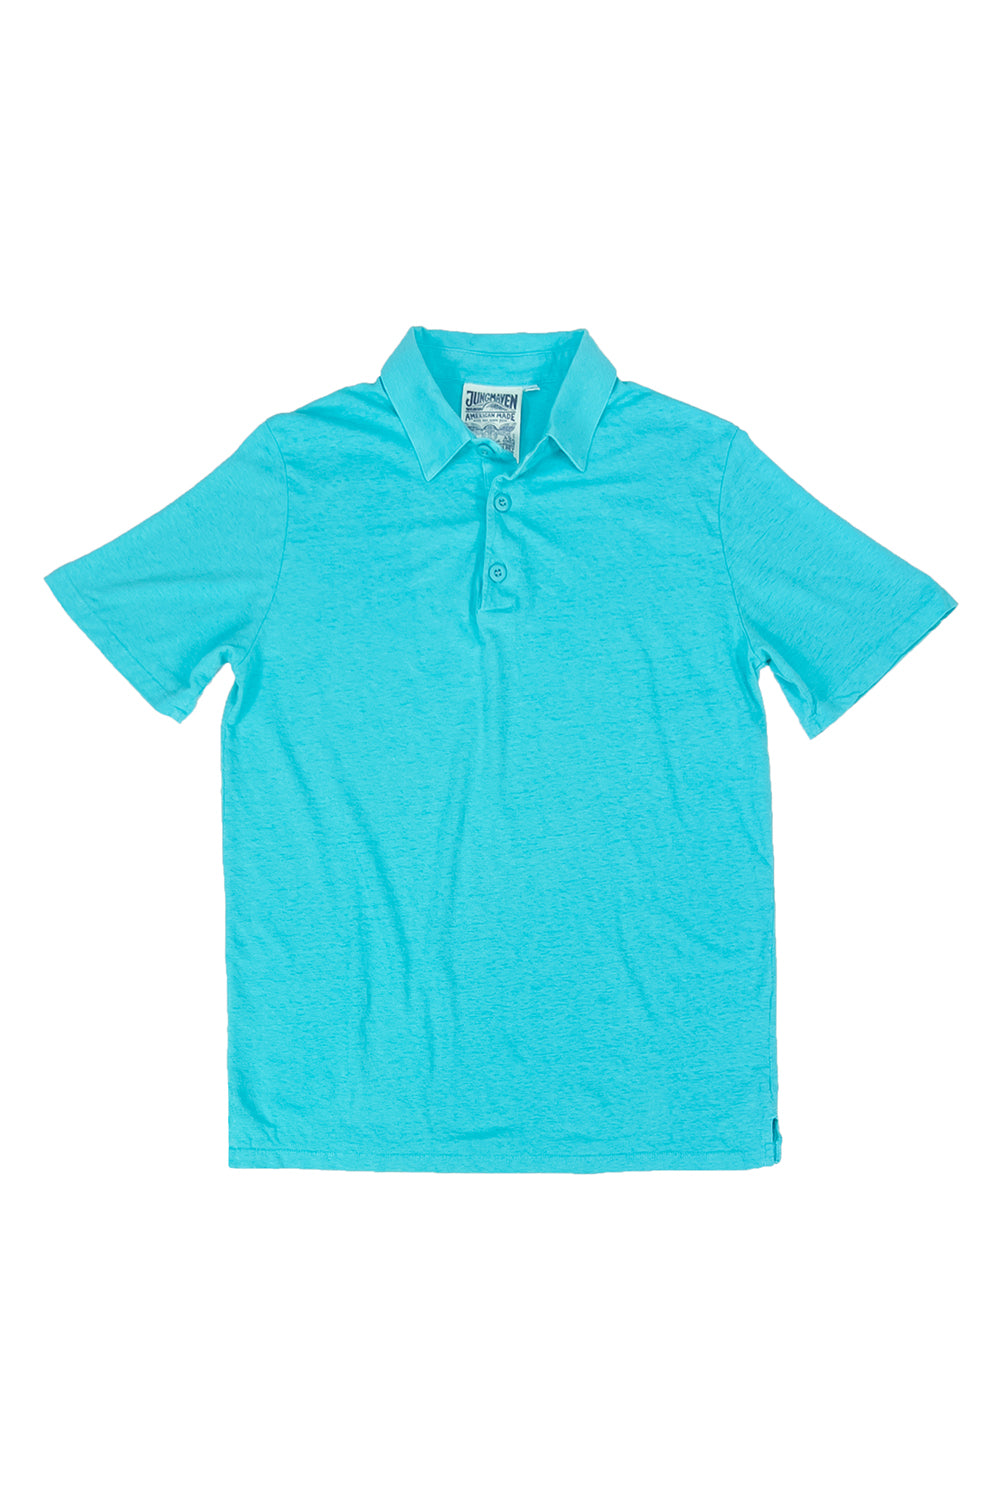 Camden Polo Shirt | Jungmaven Hemp Clothing & Accessories / Color: Caribbean Blue